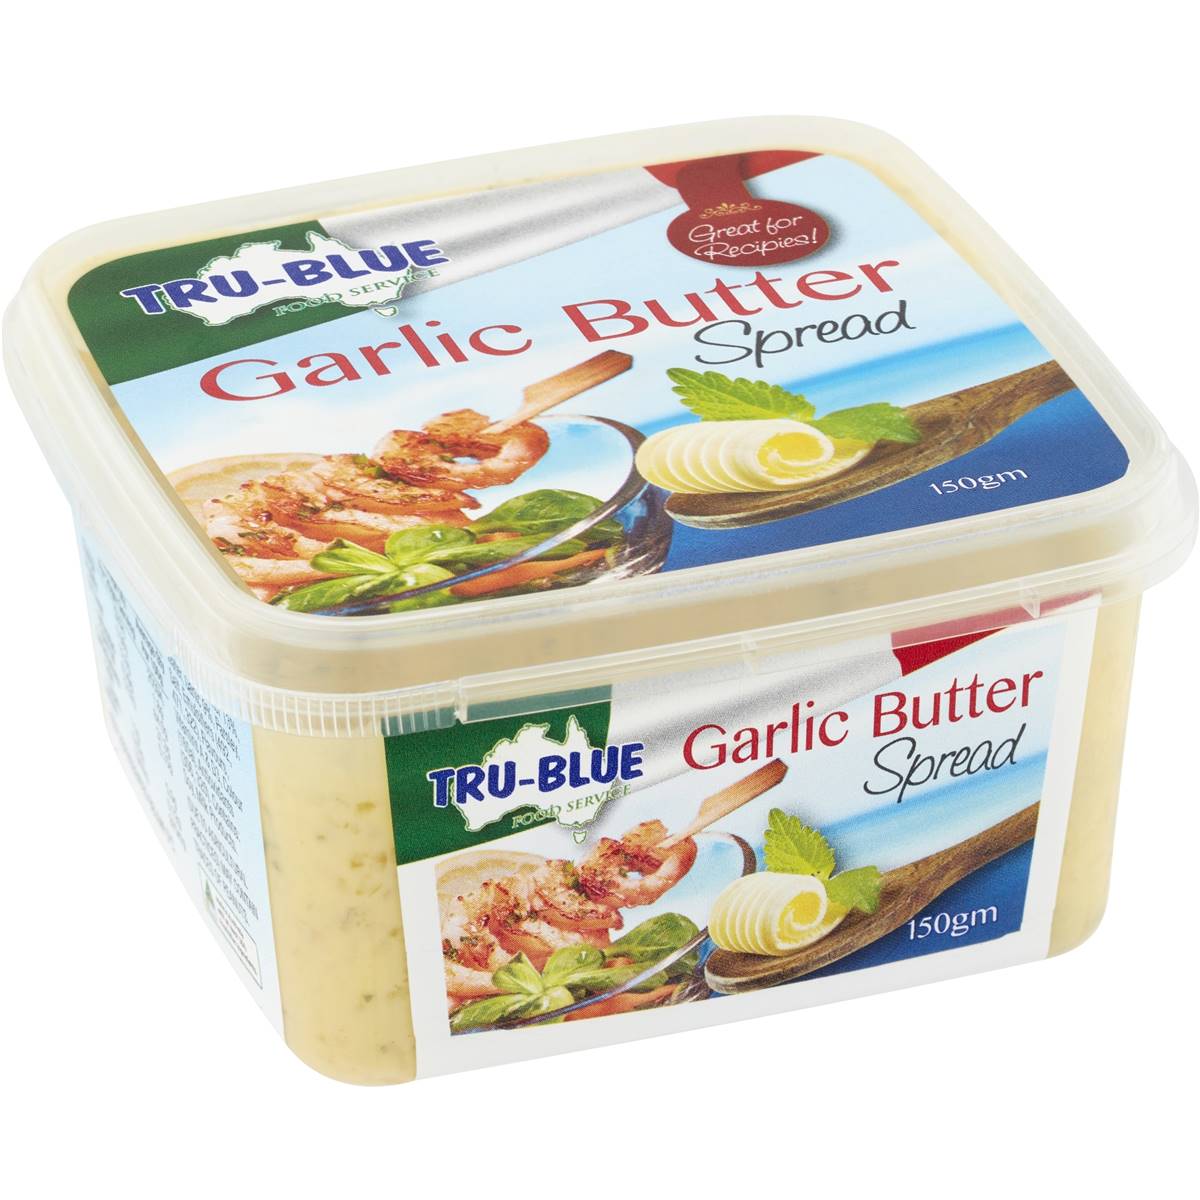 Tru-Blue Garlic Butter Spread 150gm